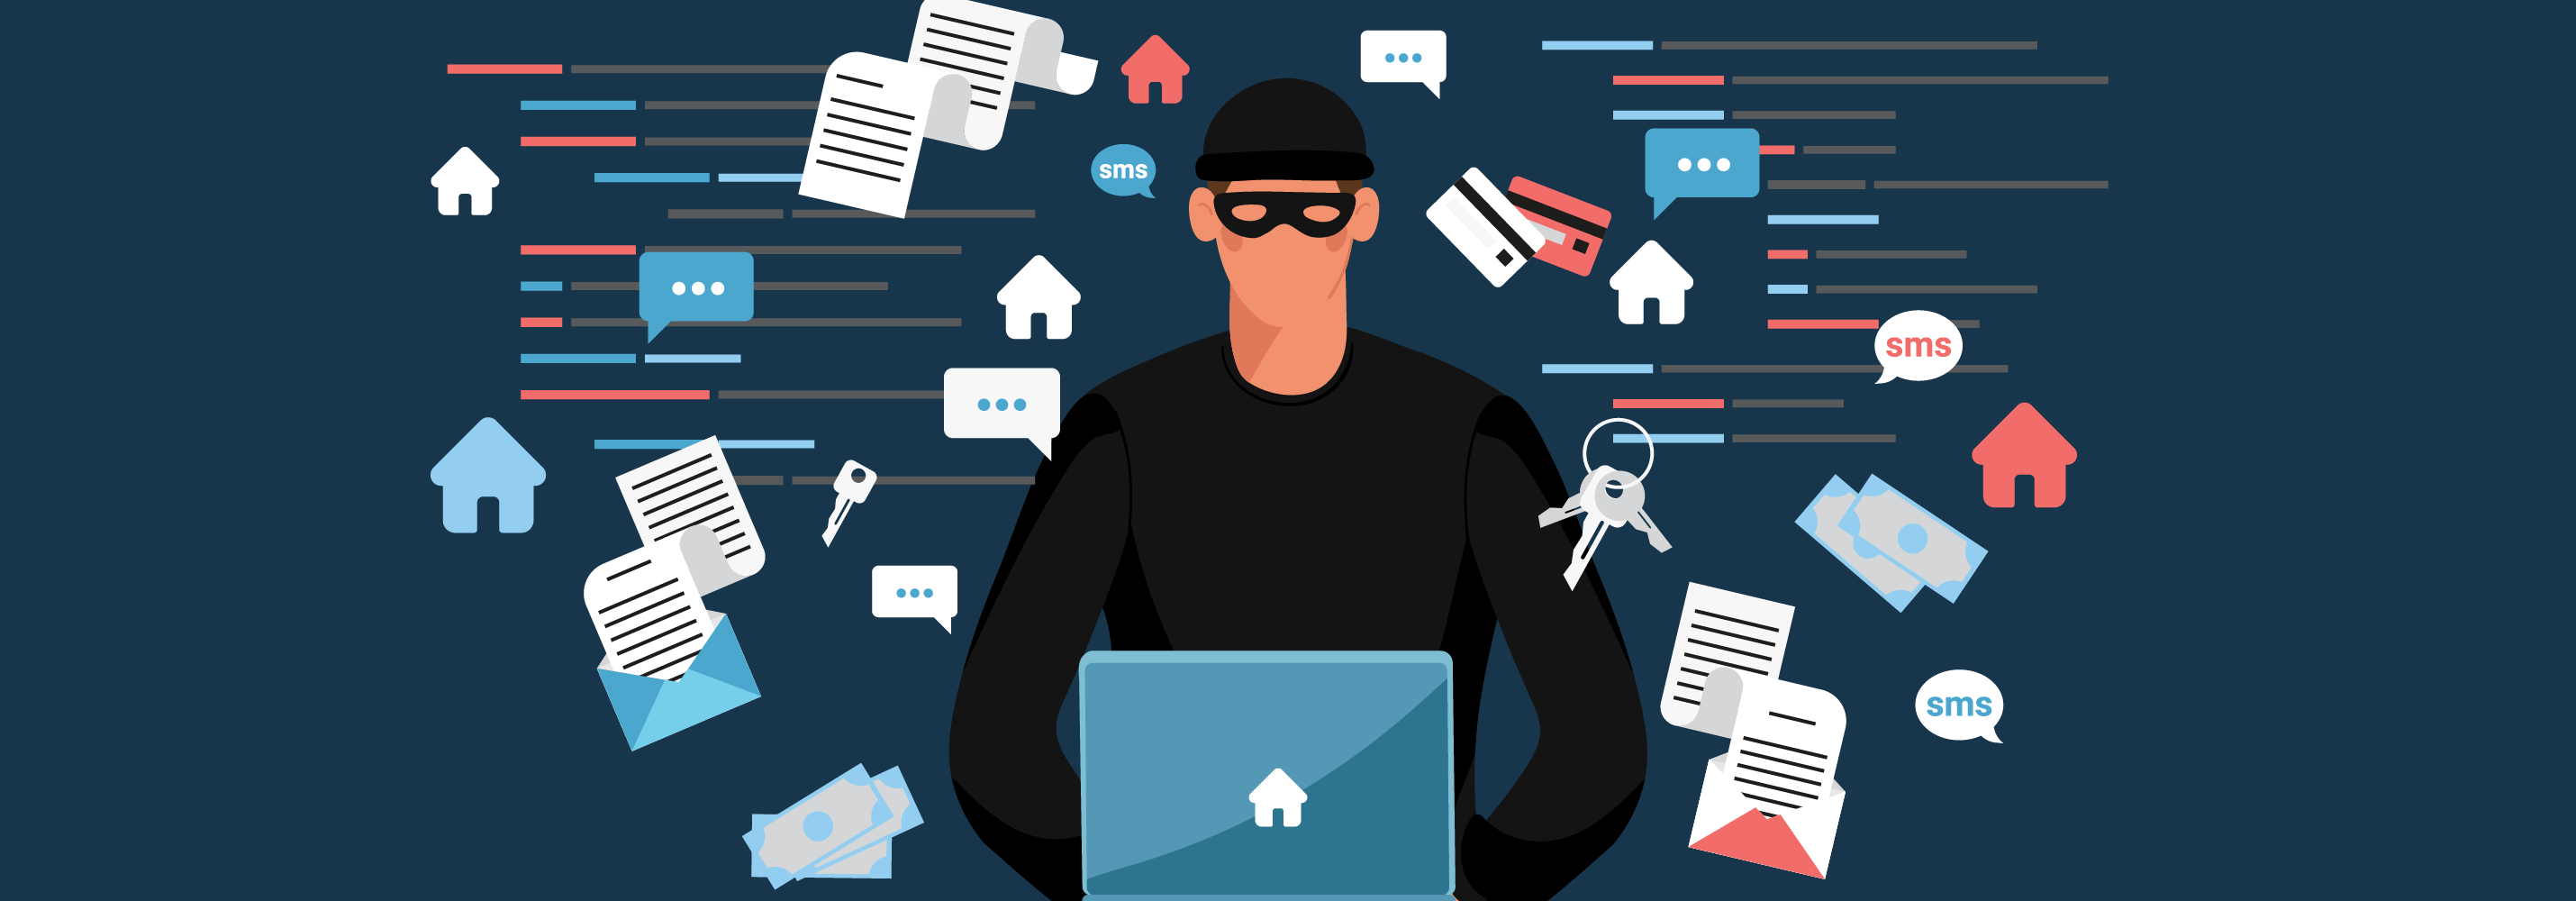 illustration of cybercriminal in real estate